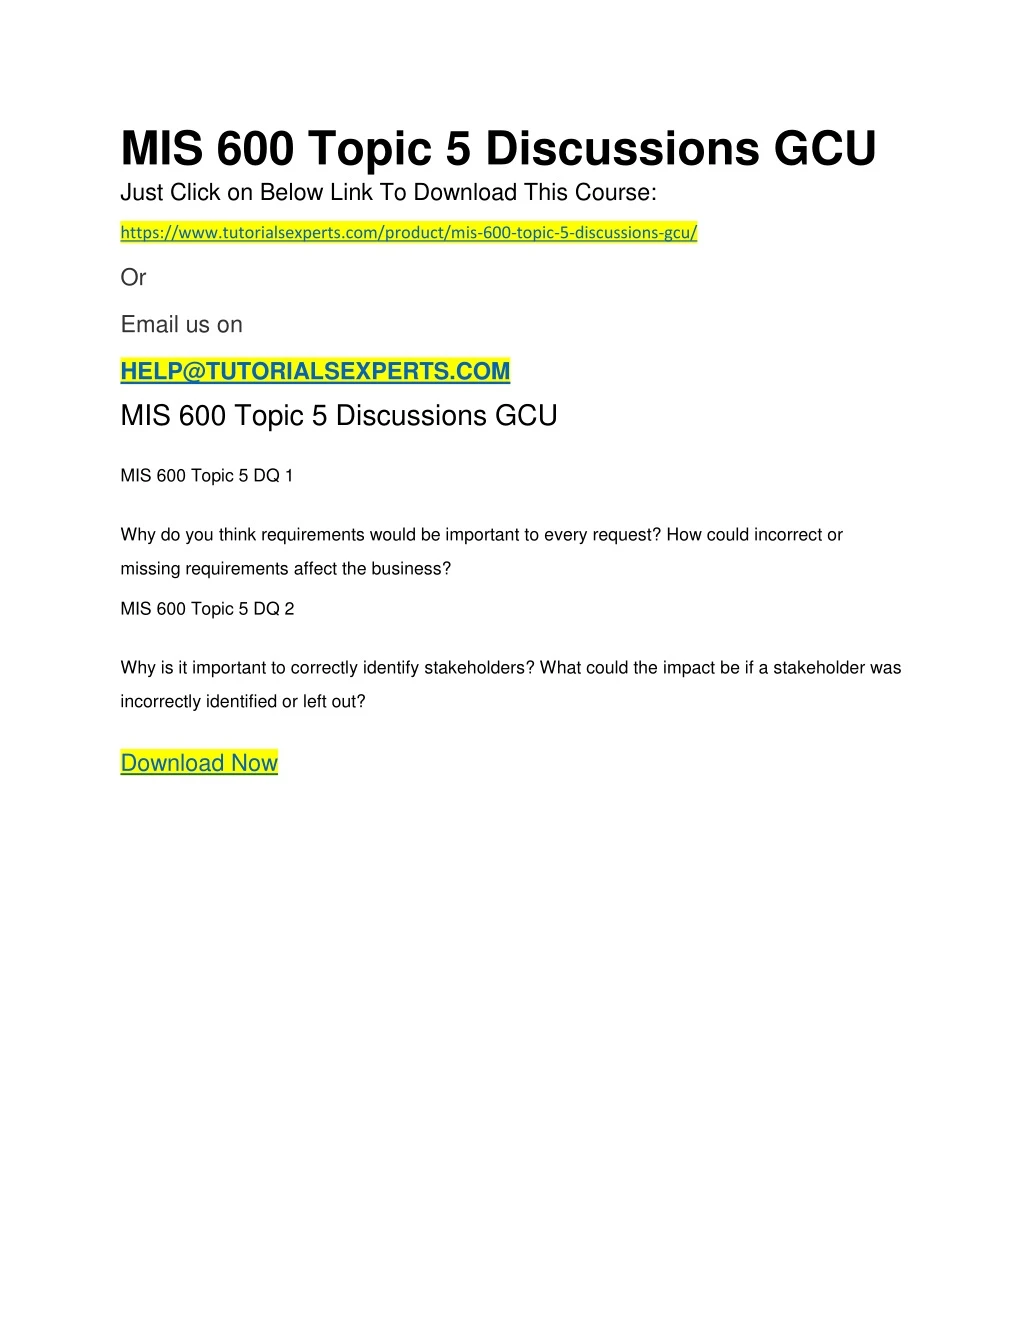 mis 600 topic 5 discussions gcu just click